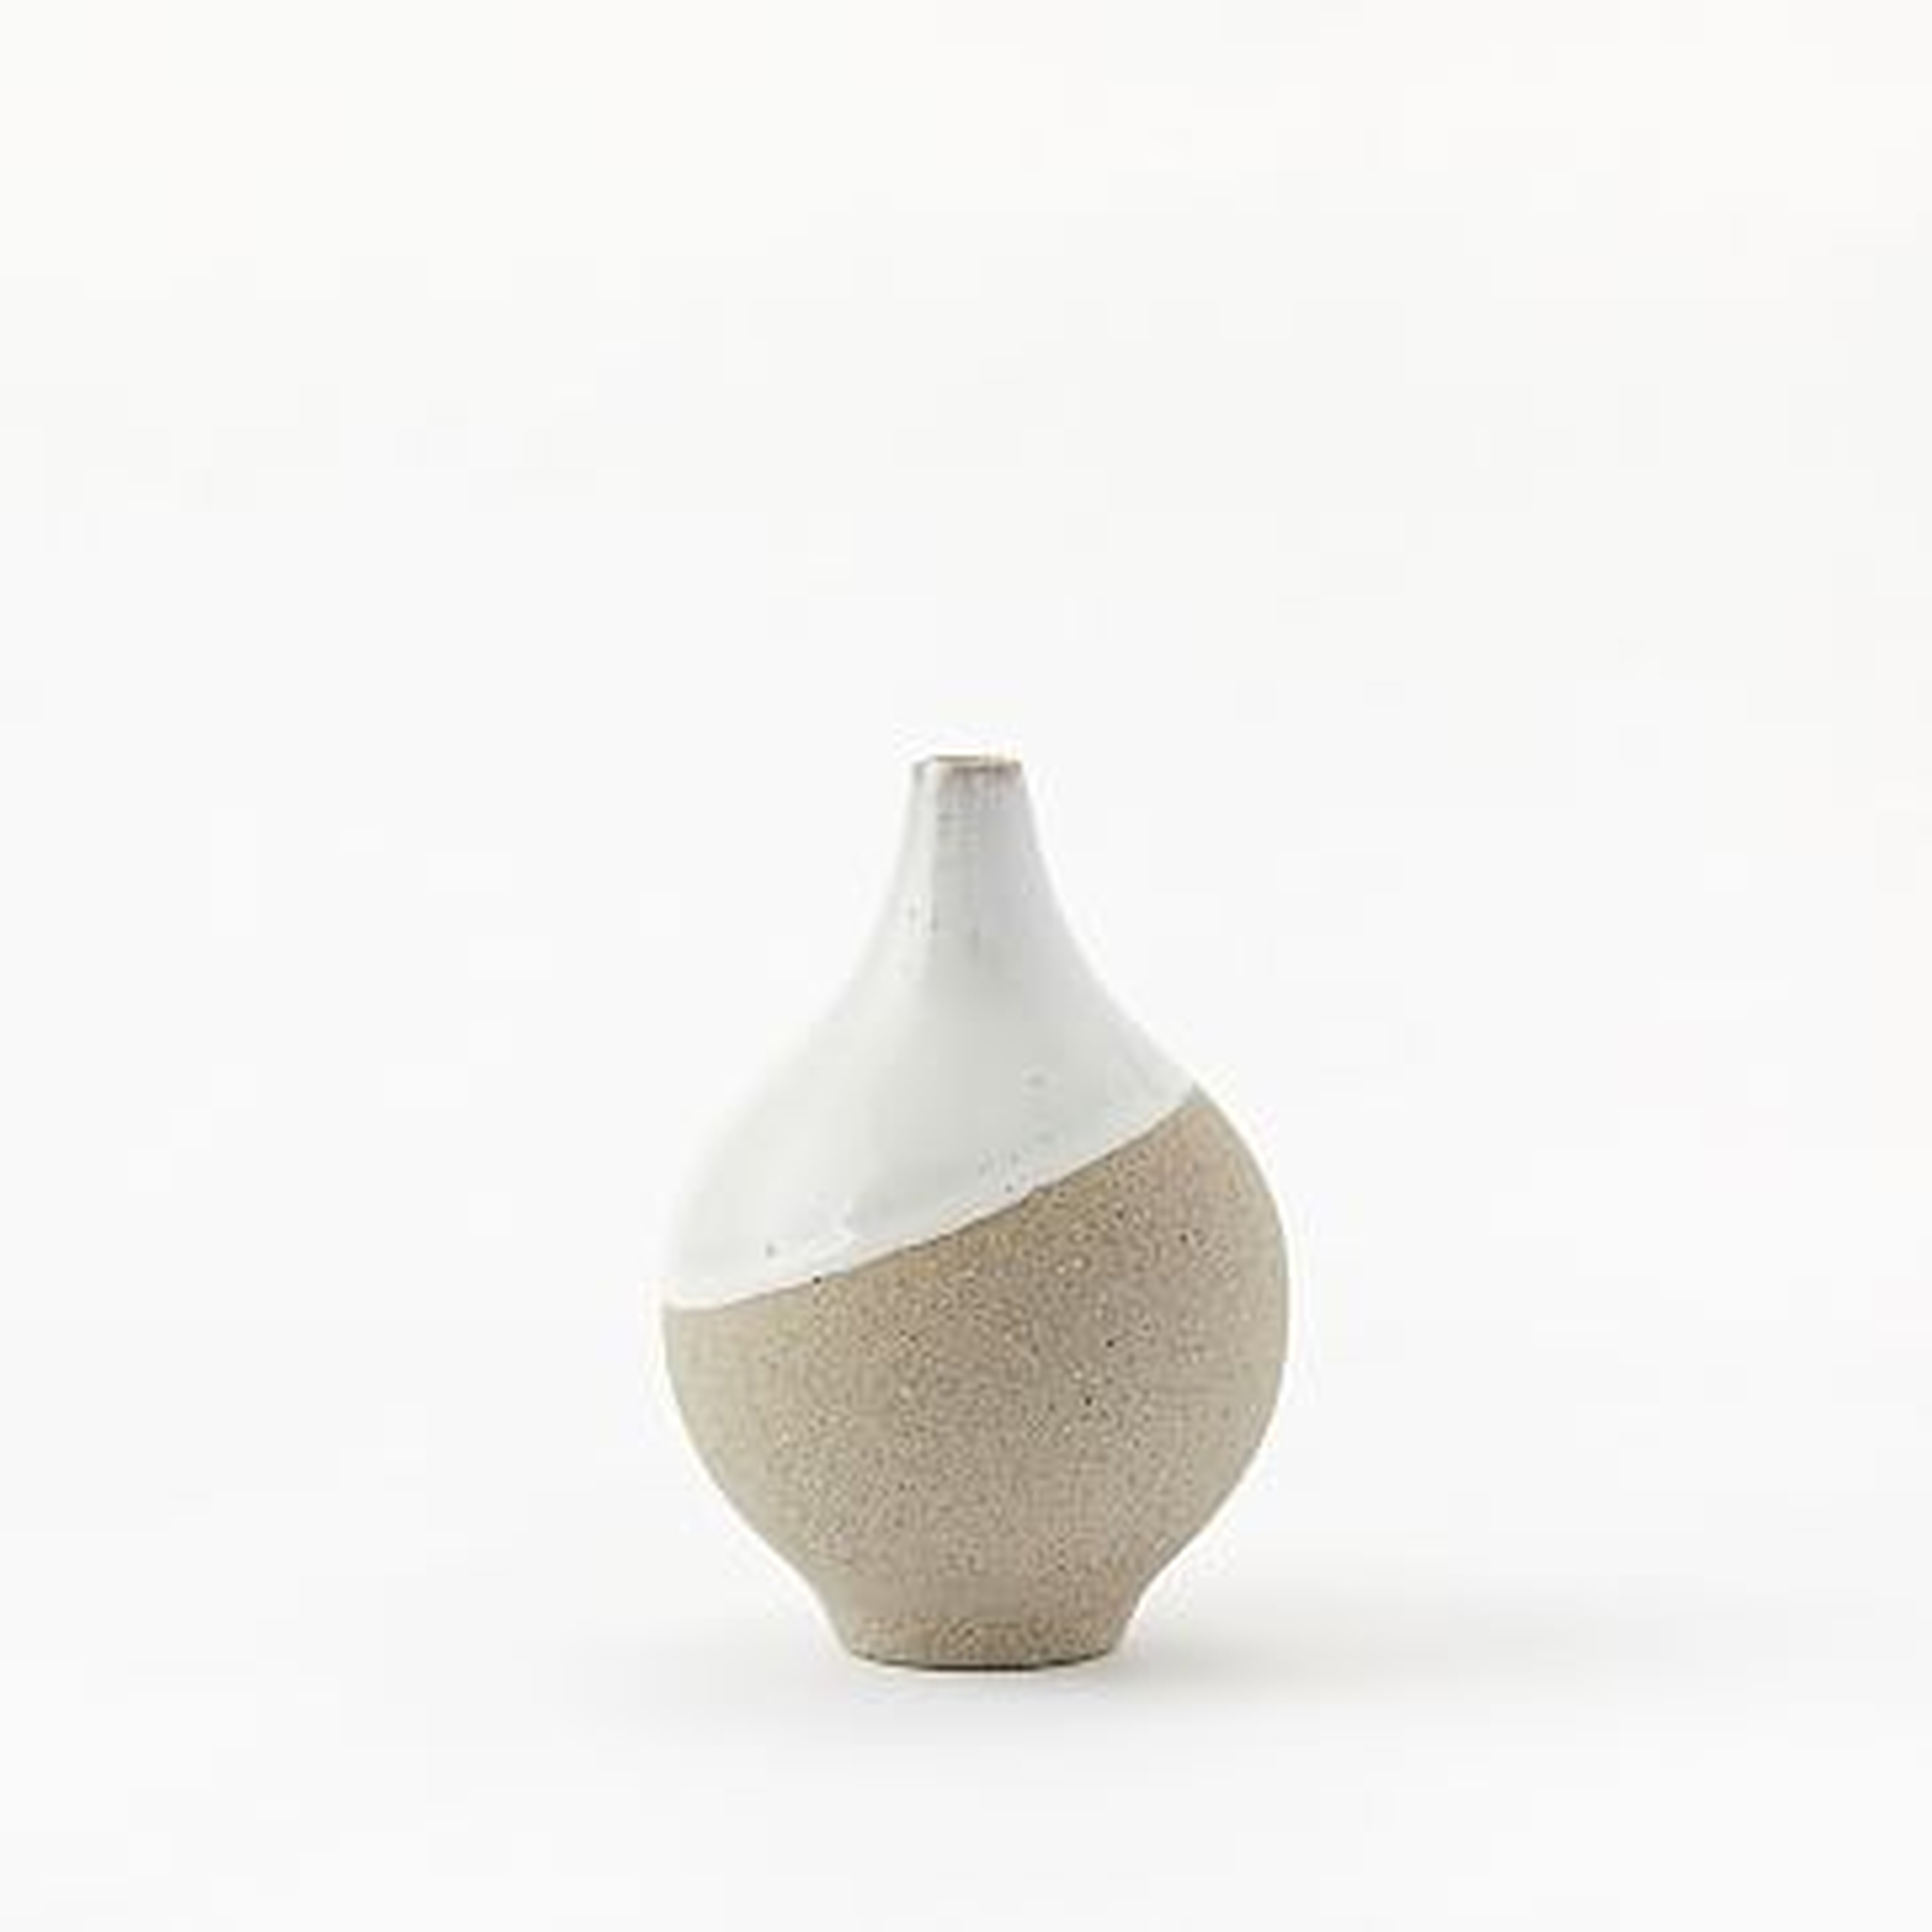 Half-Dipped Stoneware Vase, Grey/White, Small Bulb, 6" - West Elm